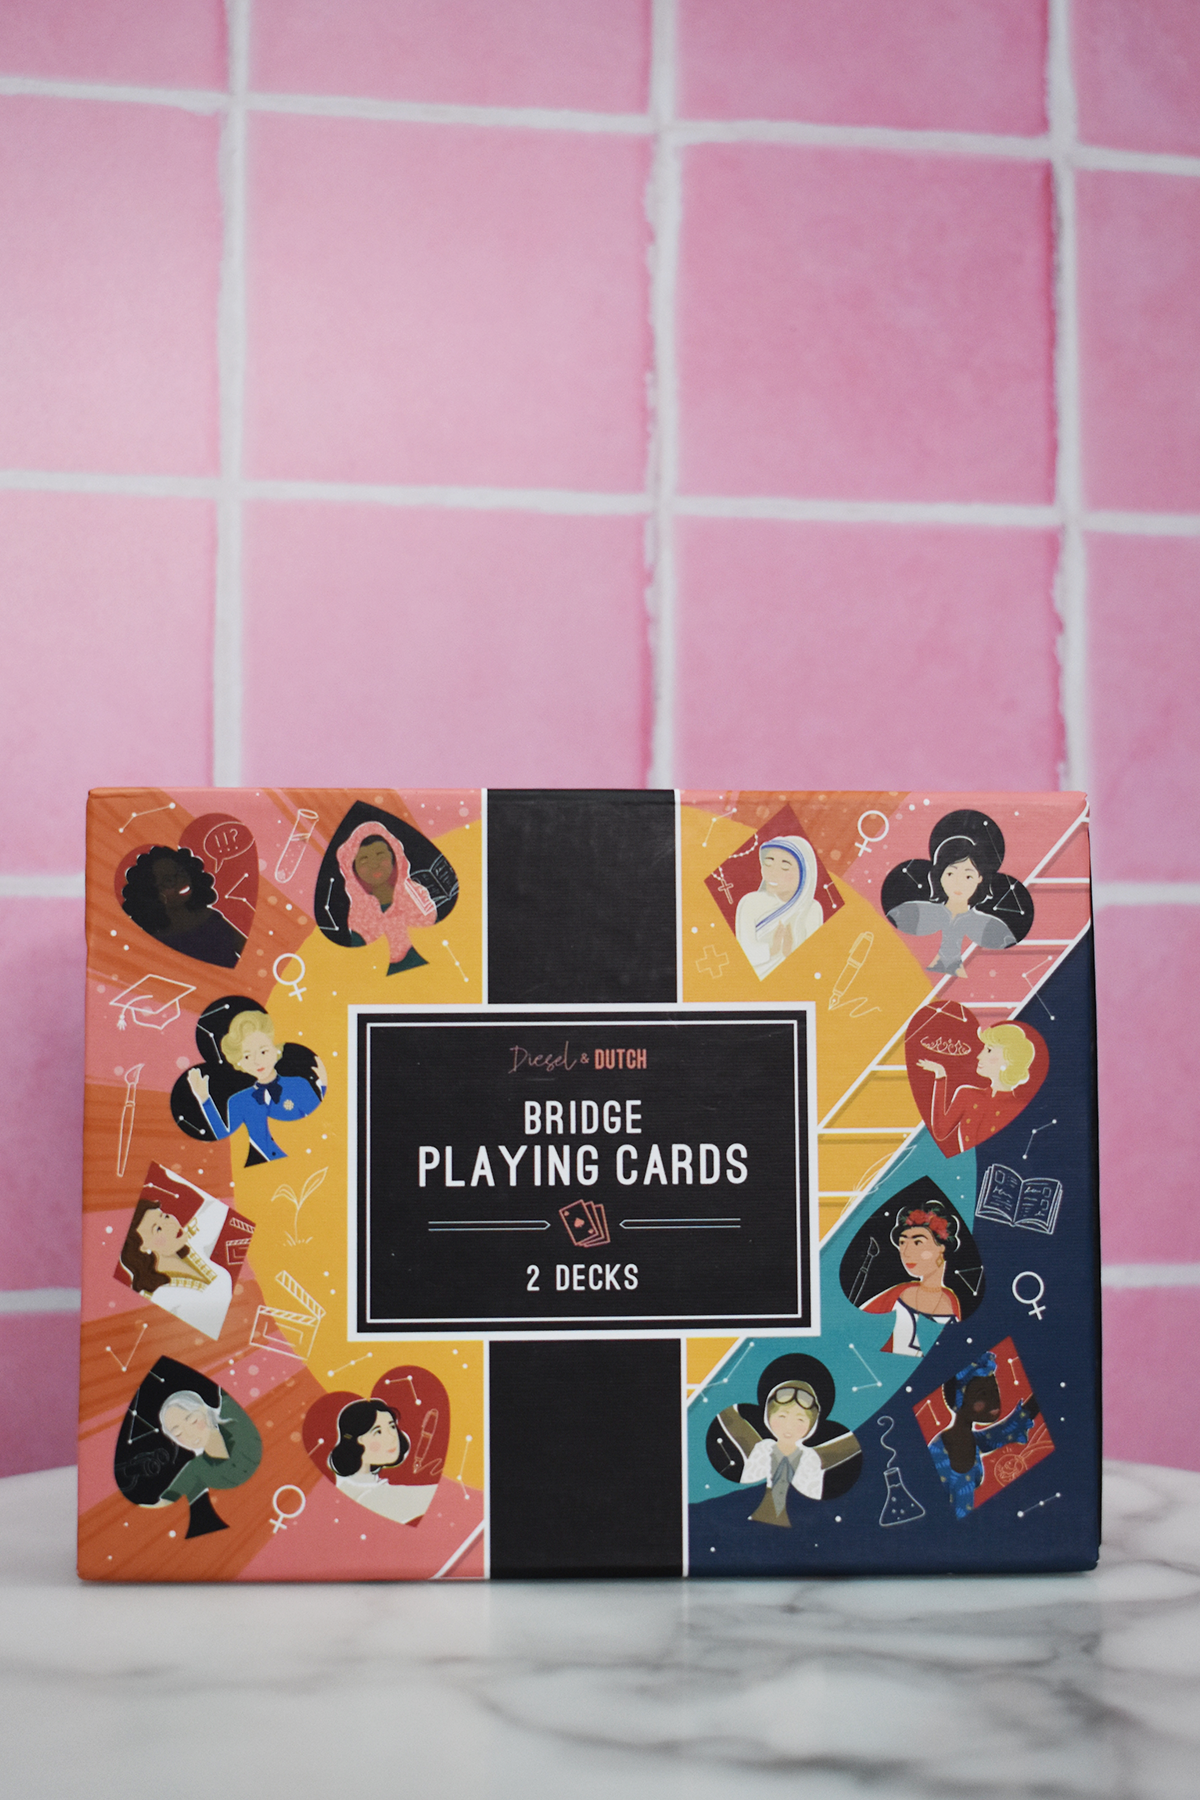 Bridge Playing Cards - Empowered Women